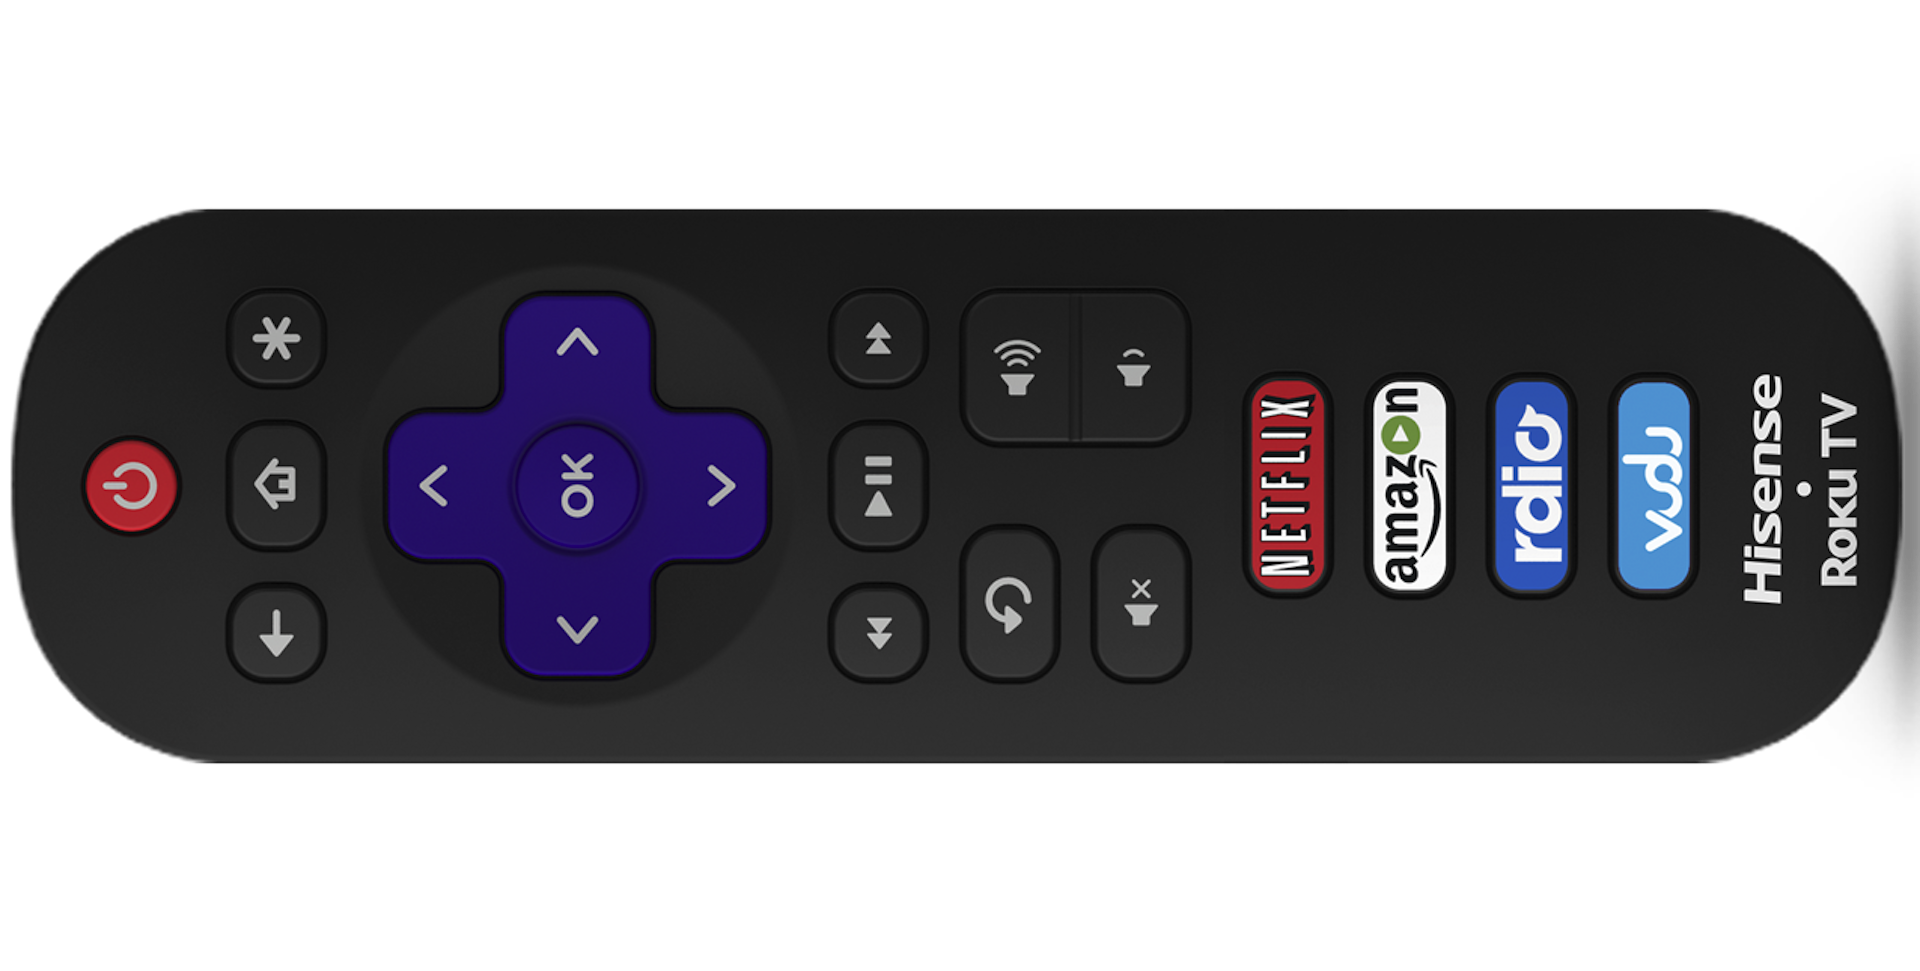 Hisense TV Remote. Пульт Hisense TV. Hisense ПДУ кнопка Smart. Hisense Remote Control. Big control